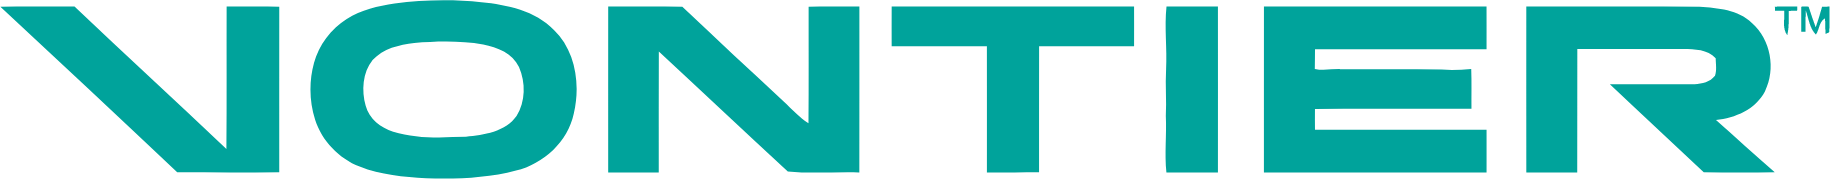 Vontier logo large (transparent PNG)